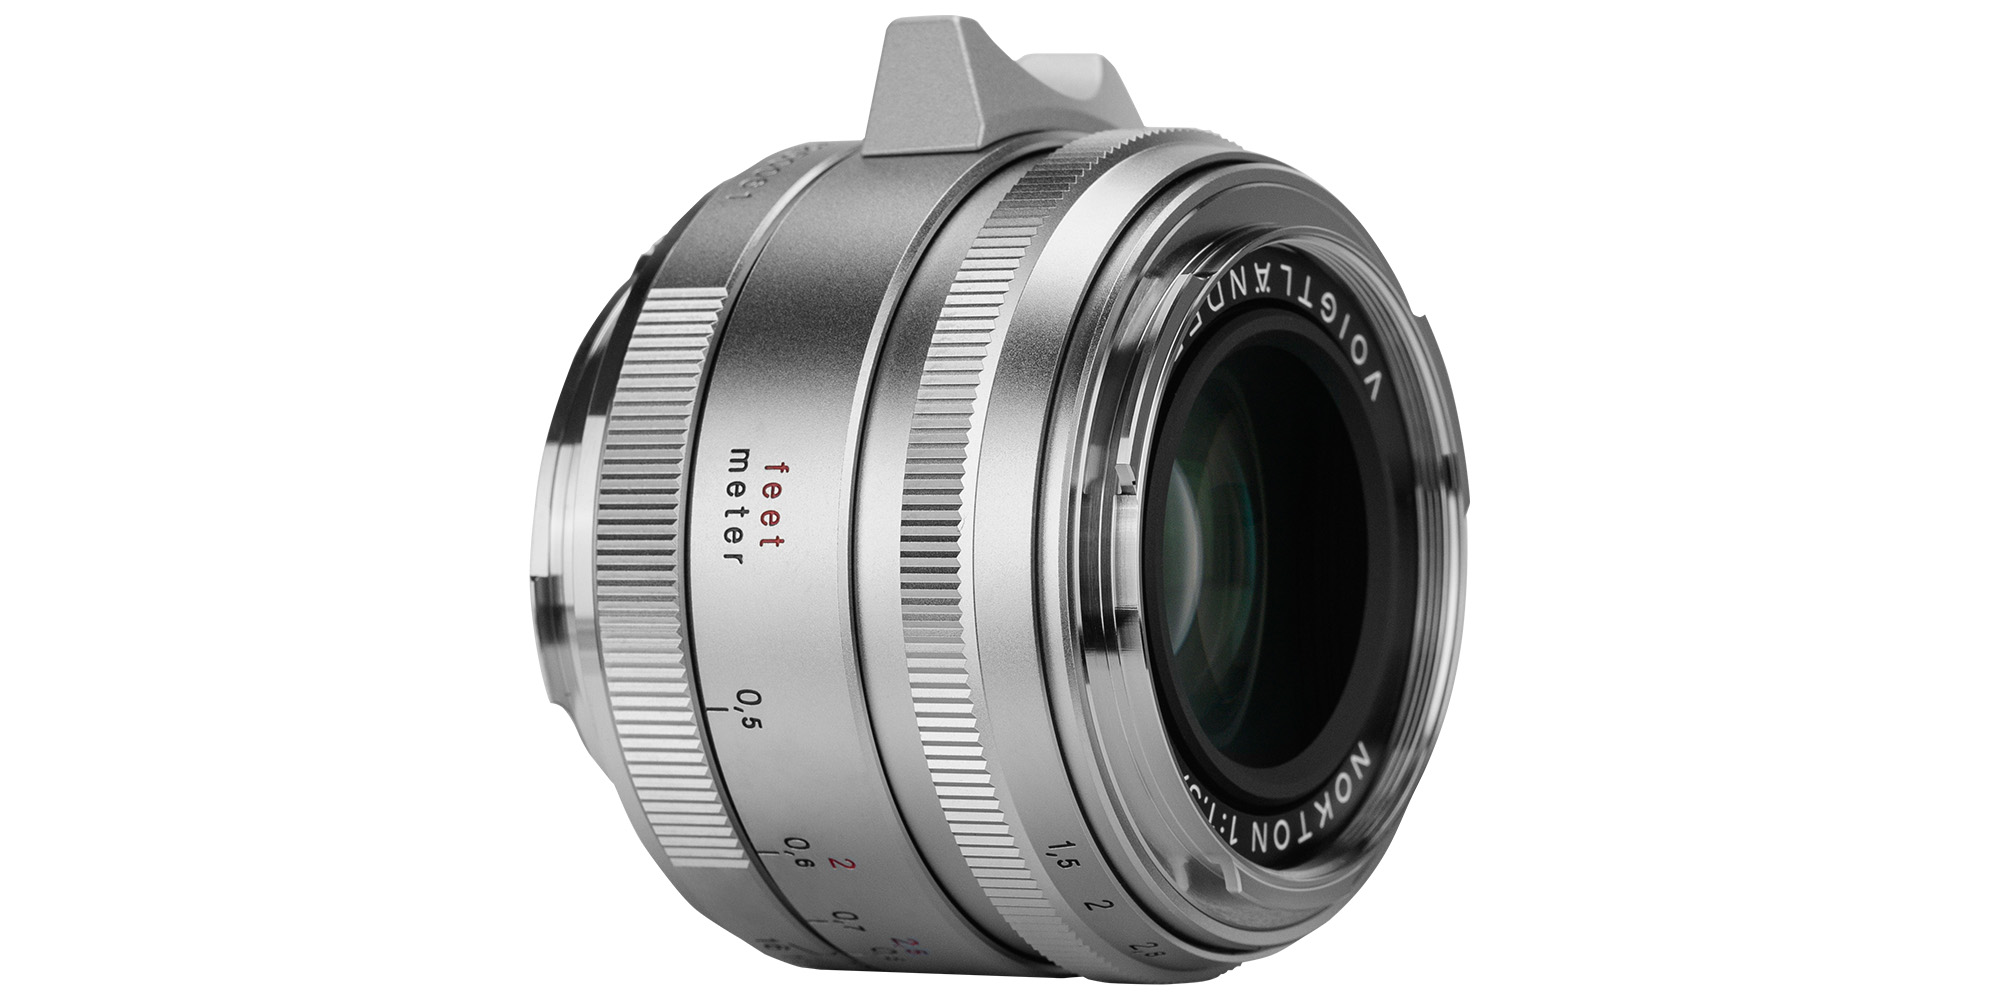 Voigtlander Nokton II Vintage Line 35 mm f_1.5 lens for Leica M - silver - 35 mm - full frame classic